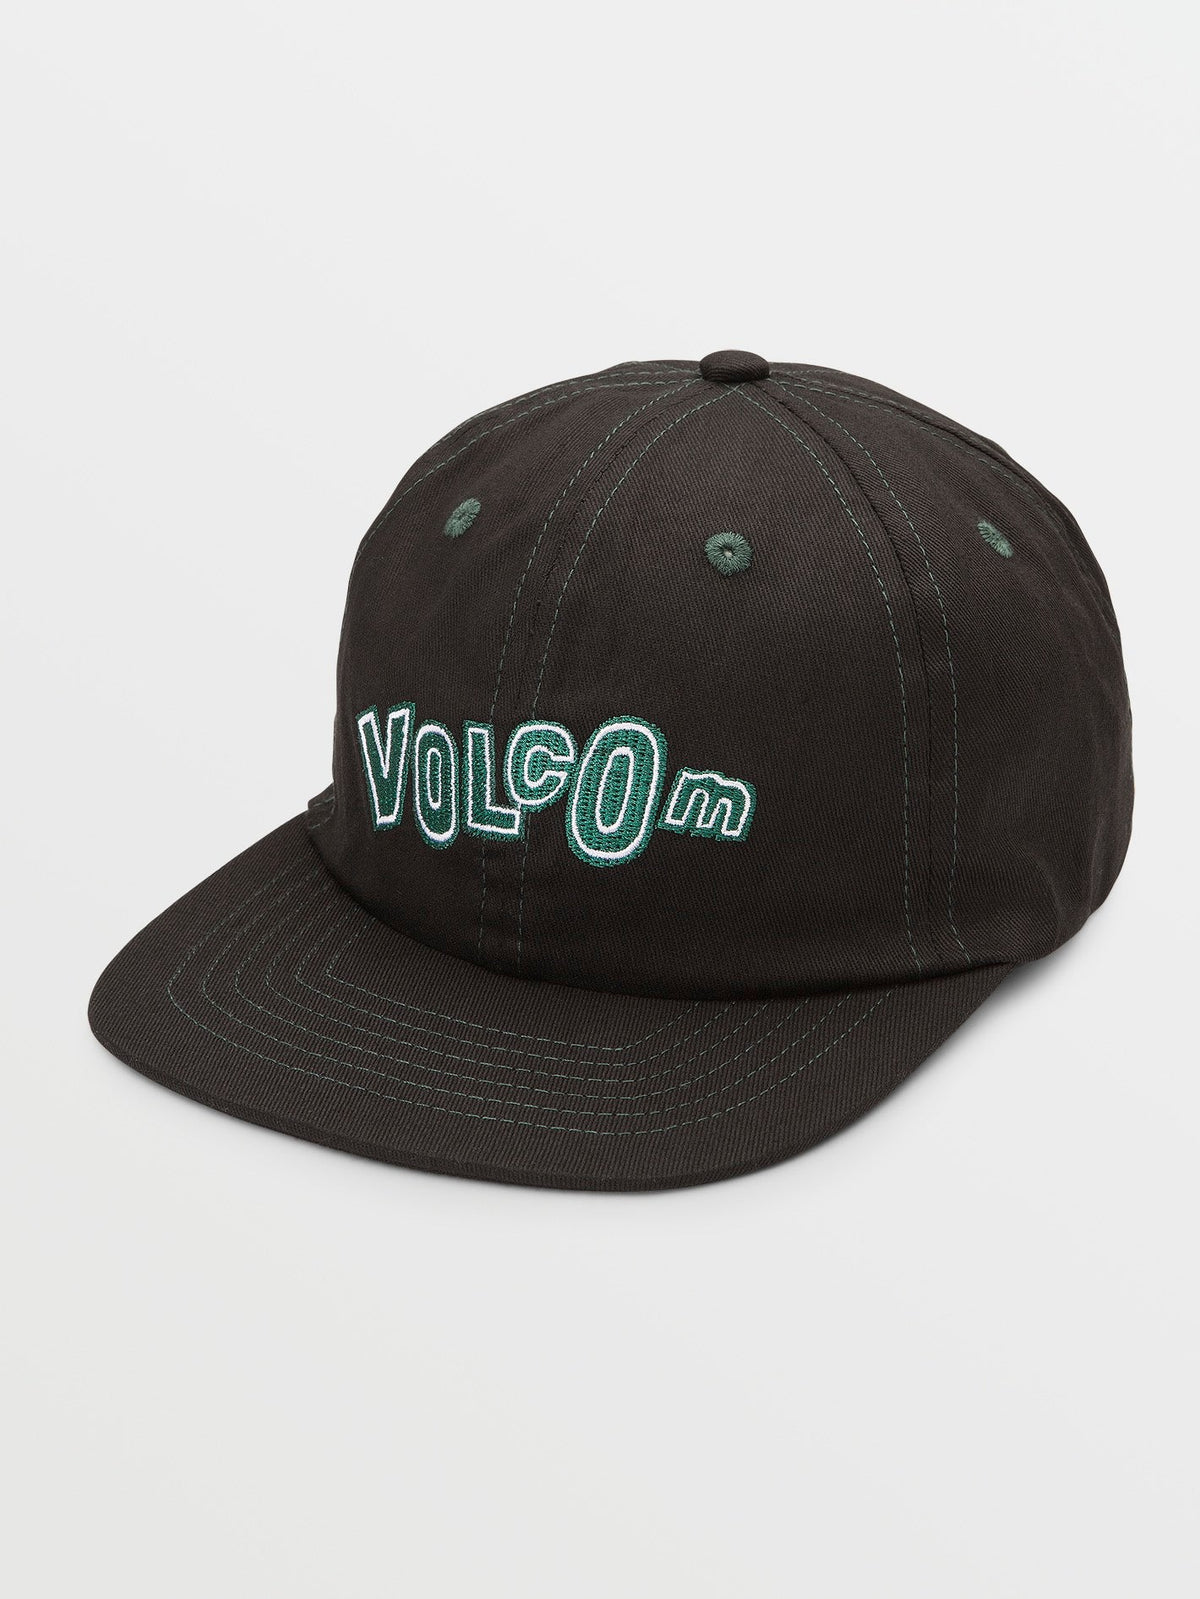 Volcom Ranso Adjustable Boys Hat (Age 2-7) Black